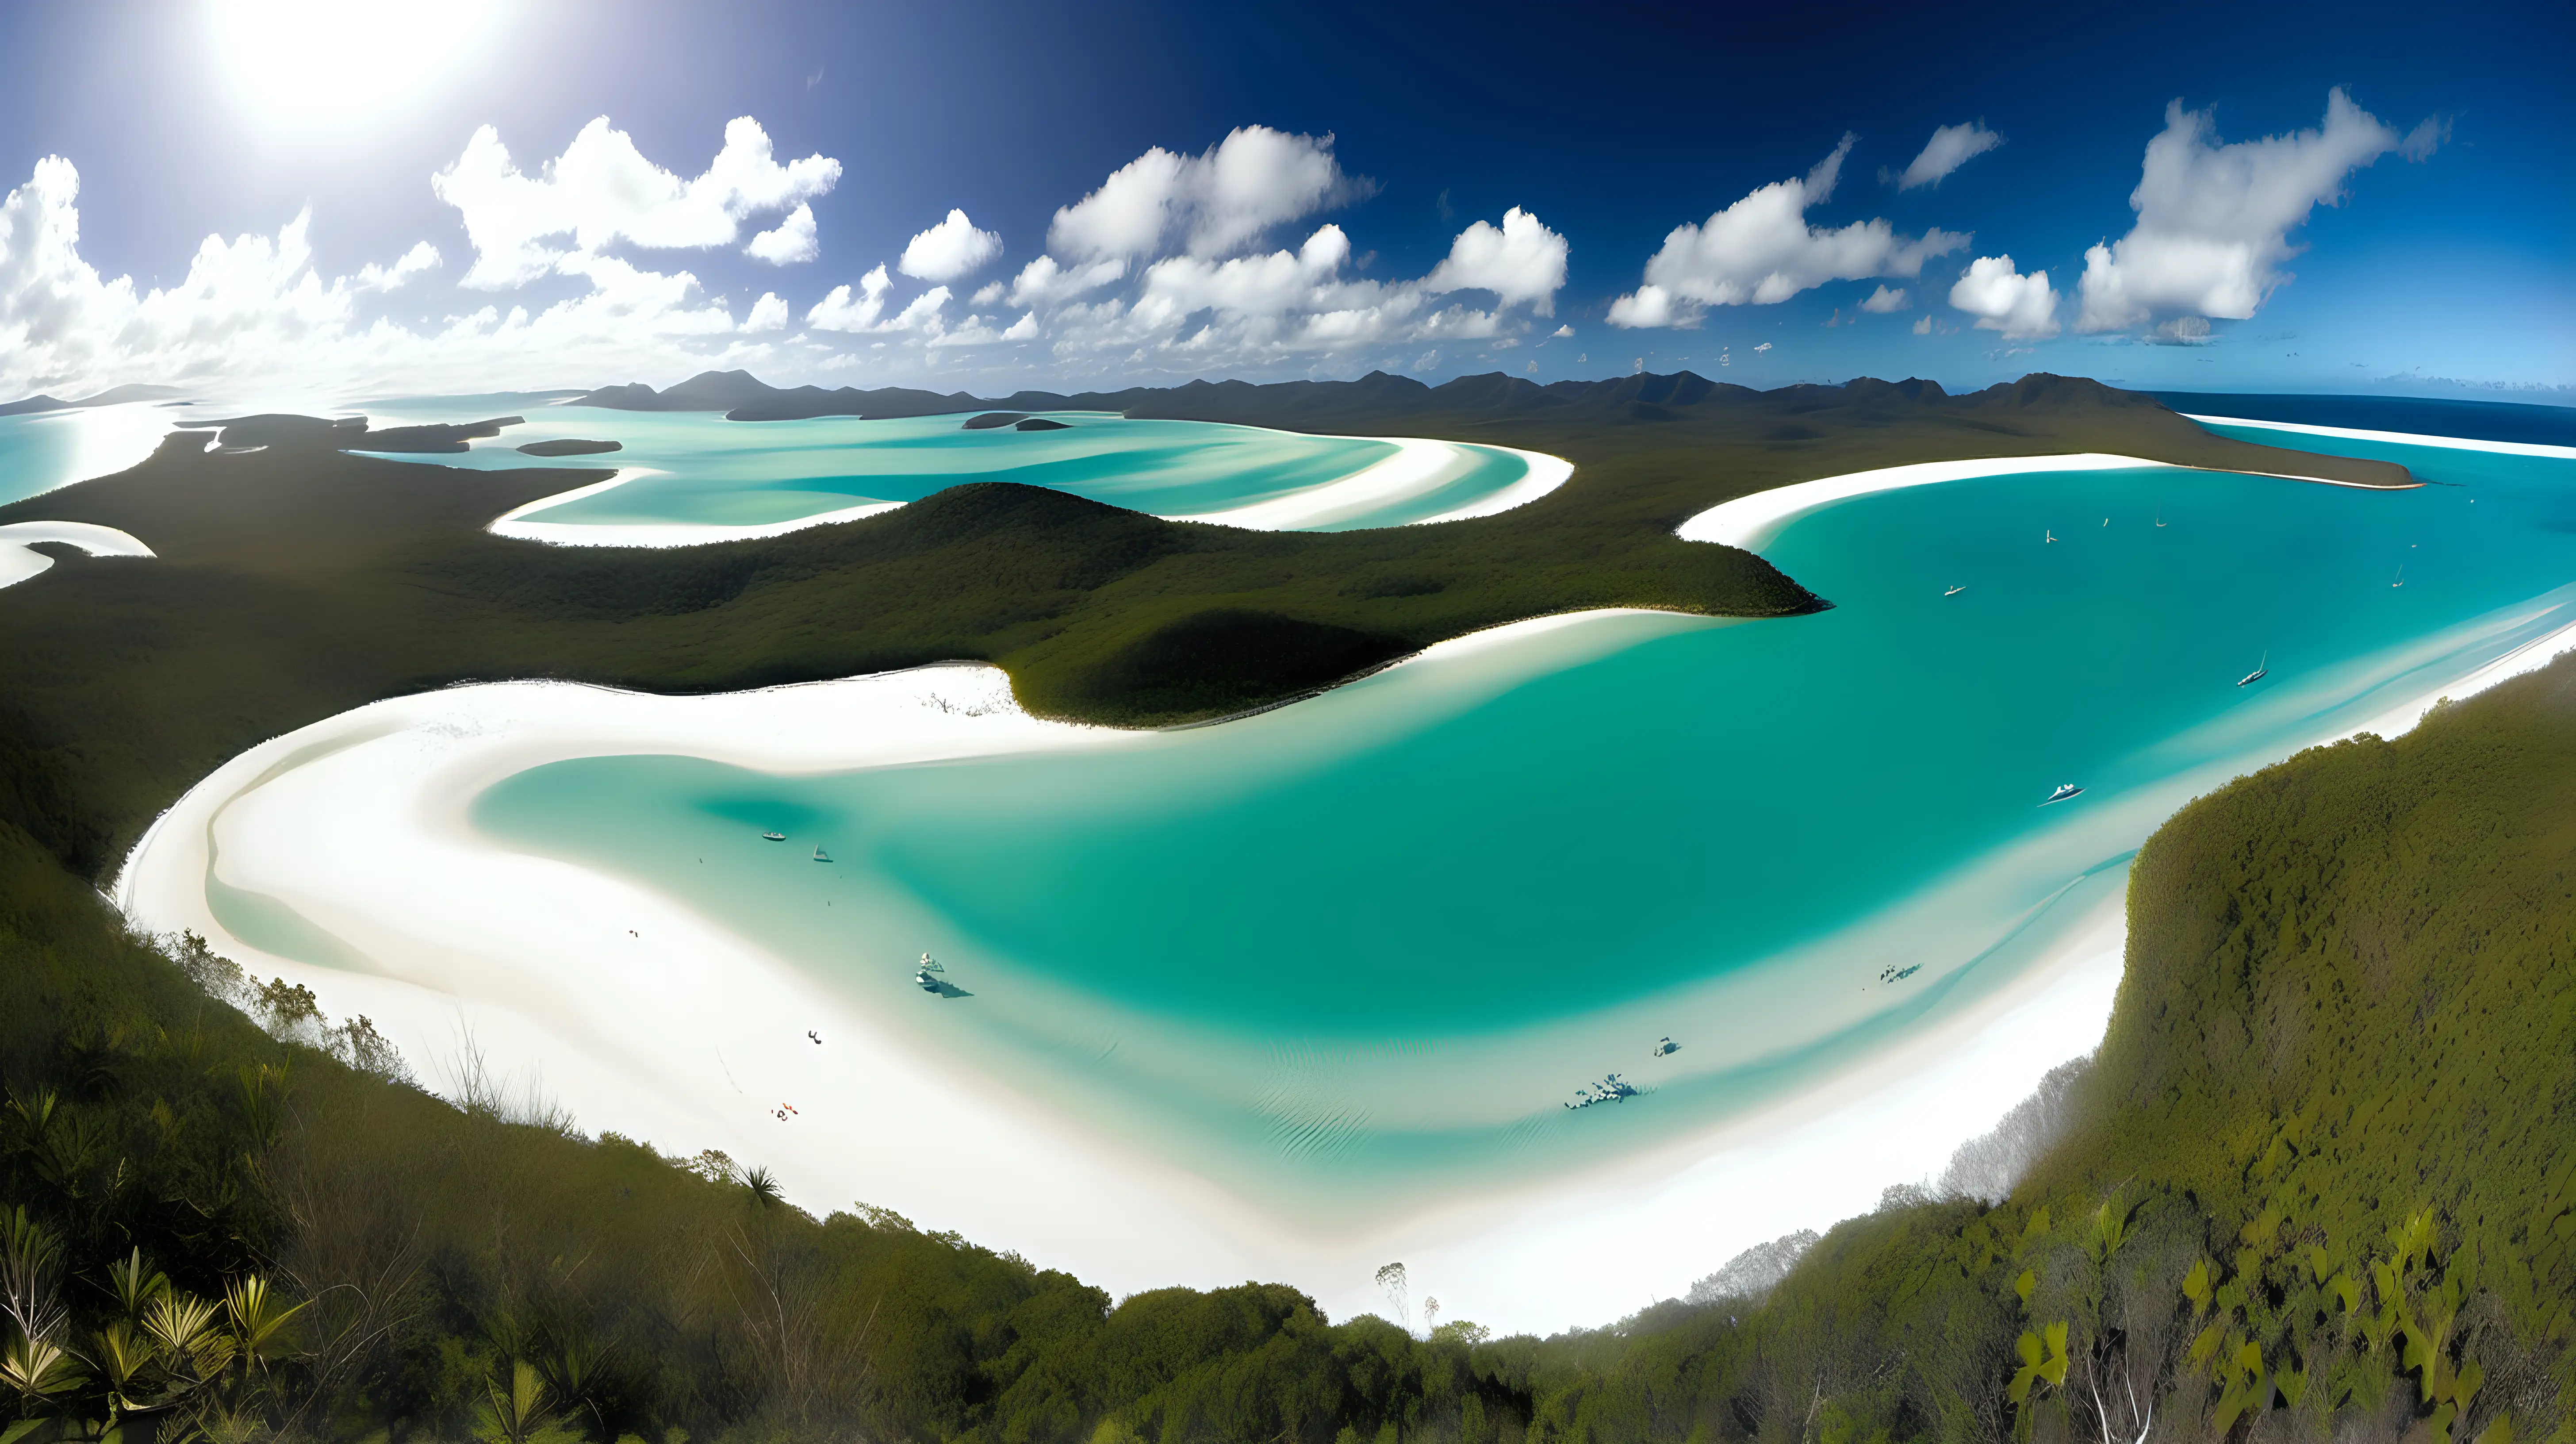 Breathtaking Panorama of Whitehaven Beach Australia Capturing its Majestic Beauty